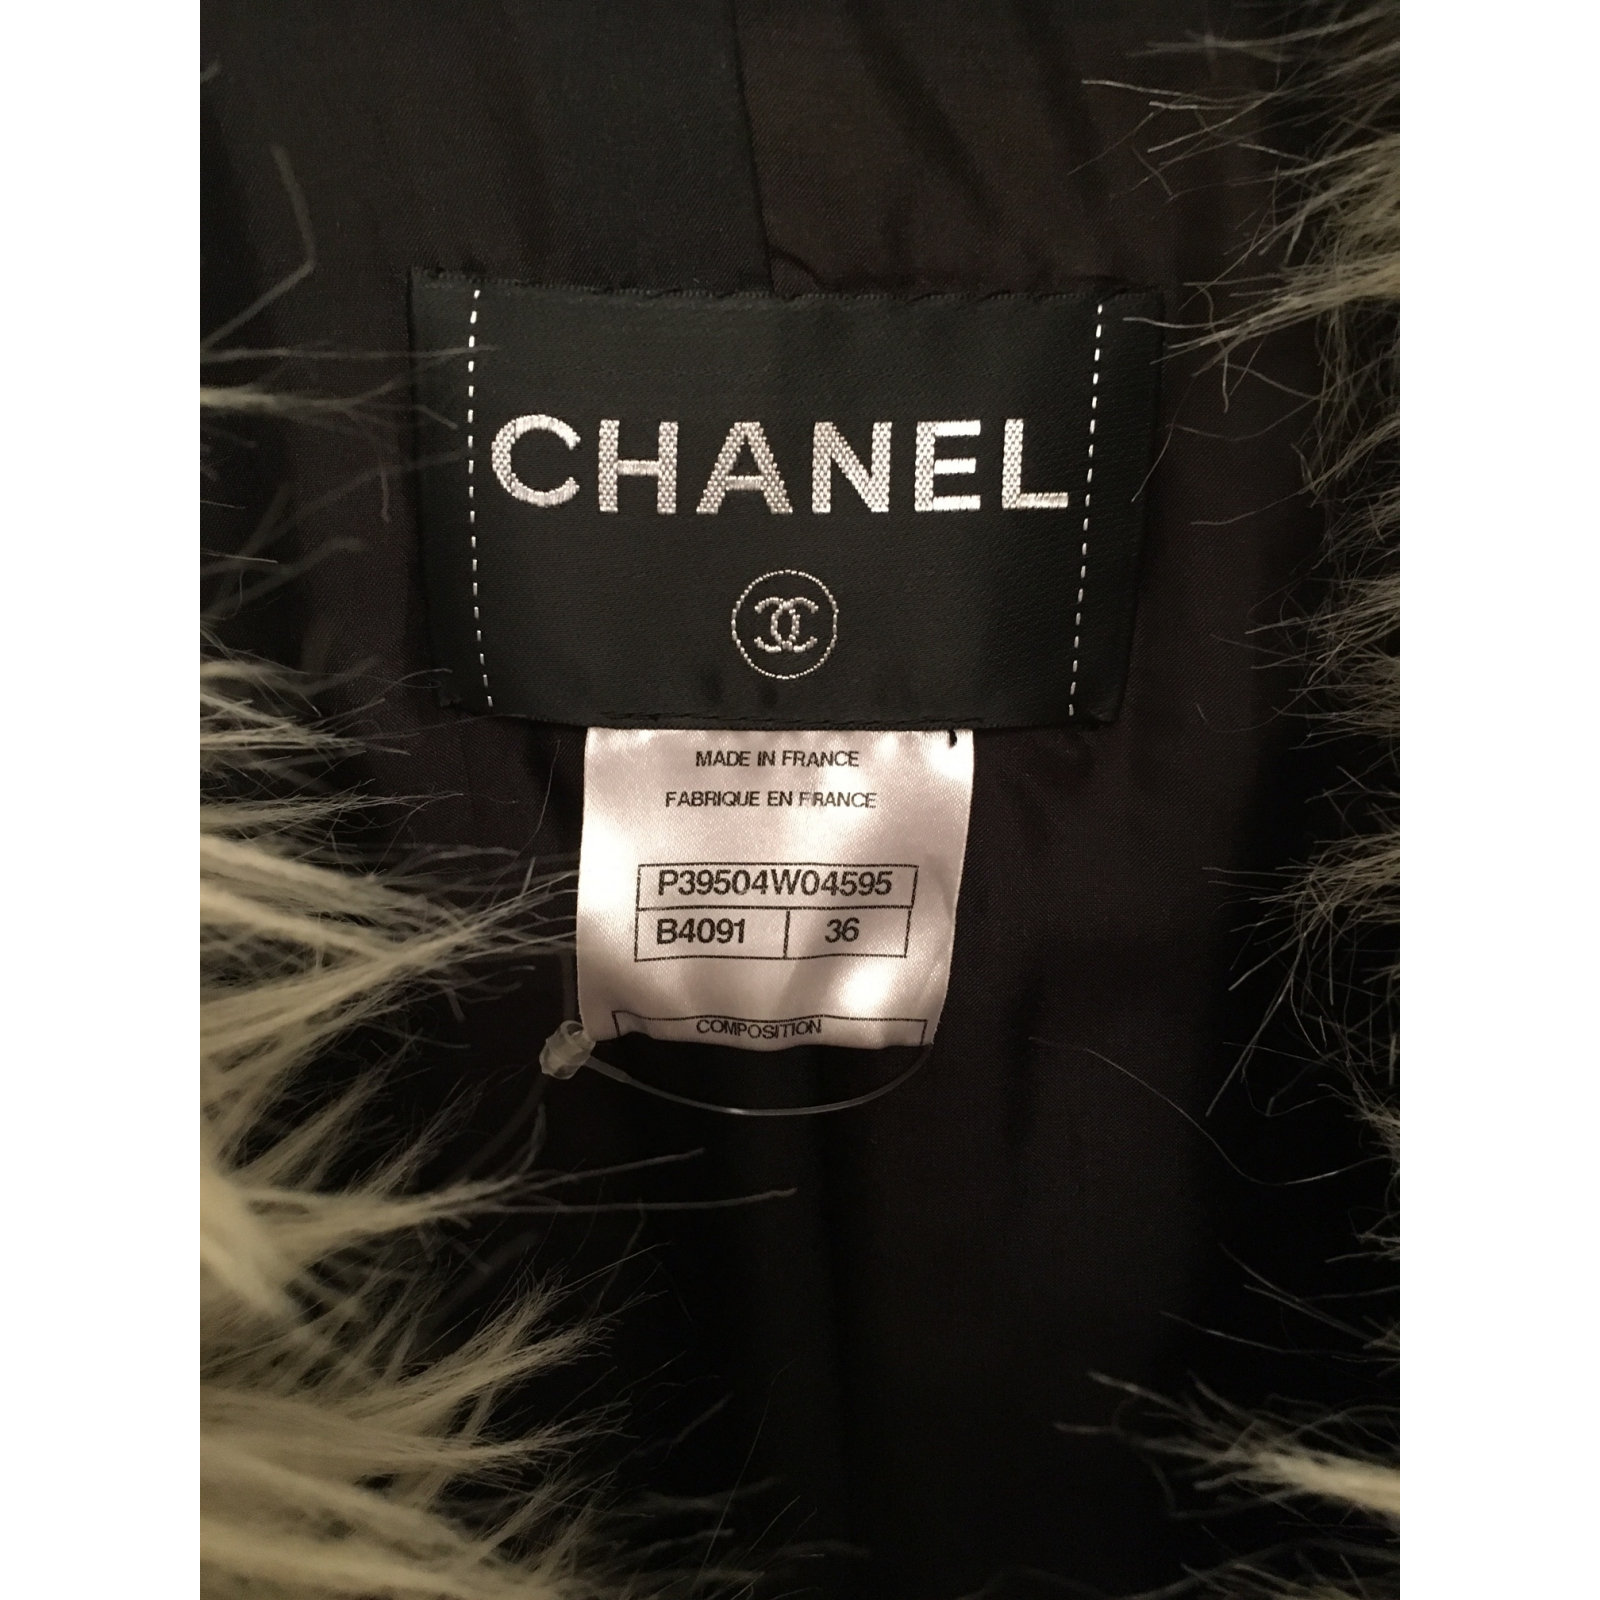 Chanel lamb leather coat